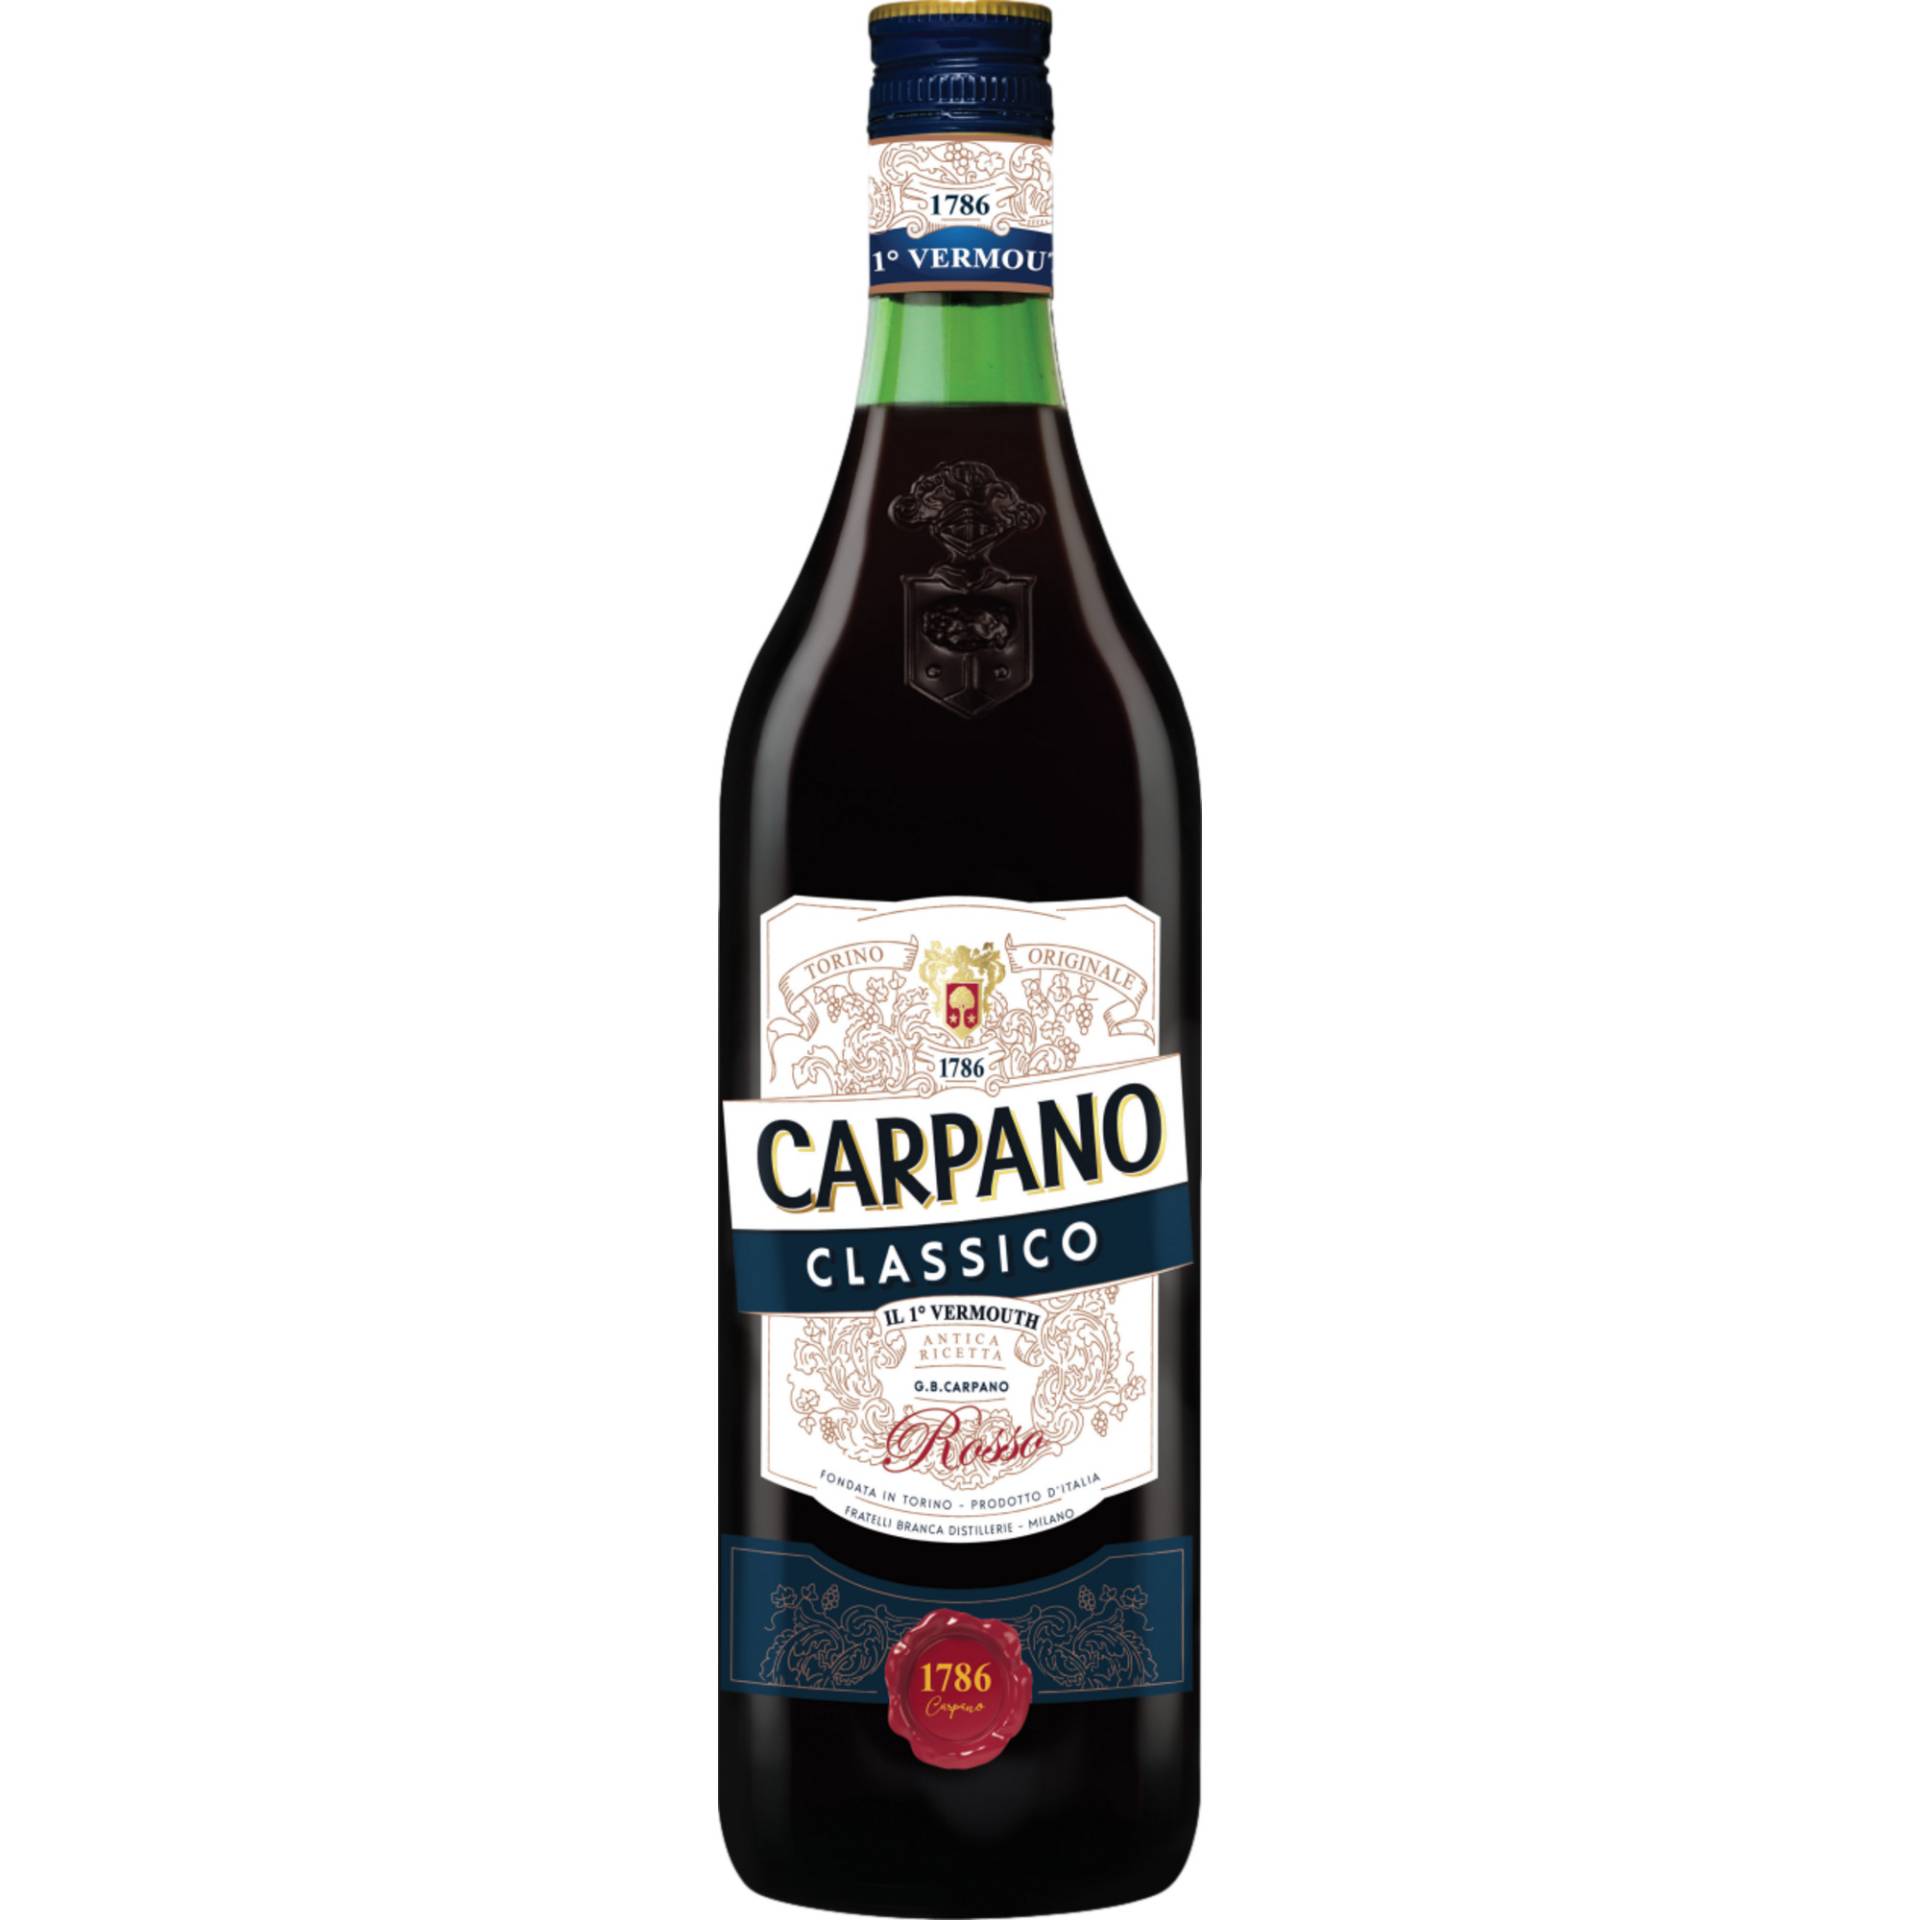 Carpano Classico Vermouth, Italien, 0,75 L, 16% Vol., Spirituosen von Fratelli Branca Distillerie S.r.l., Via Resegone 2 20159 Milano Italien